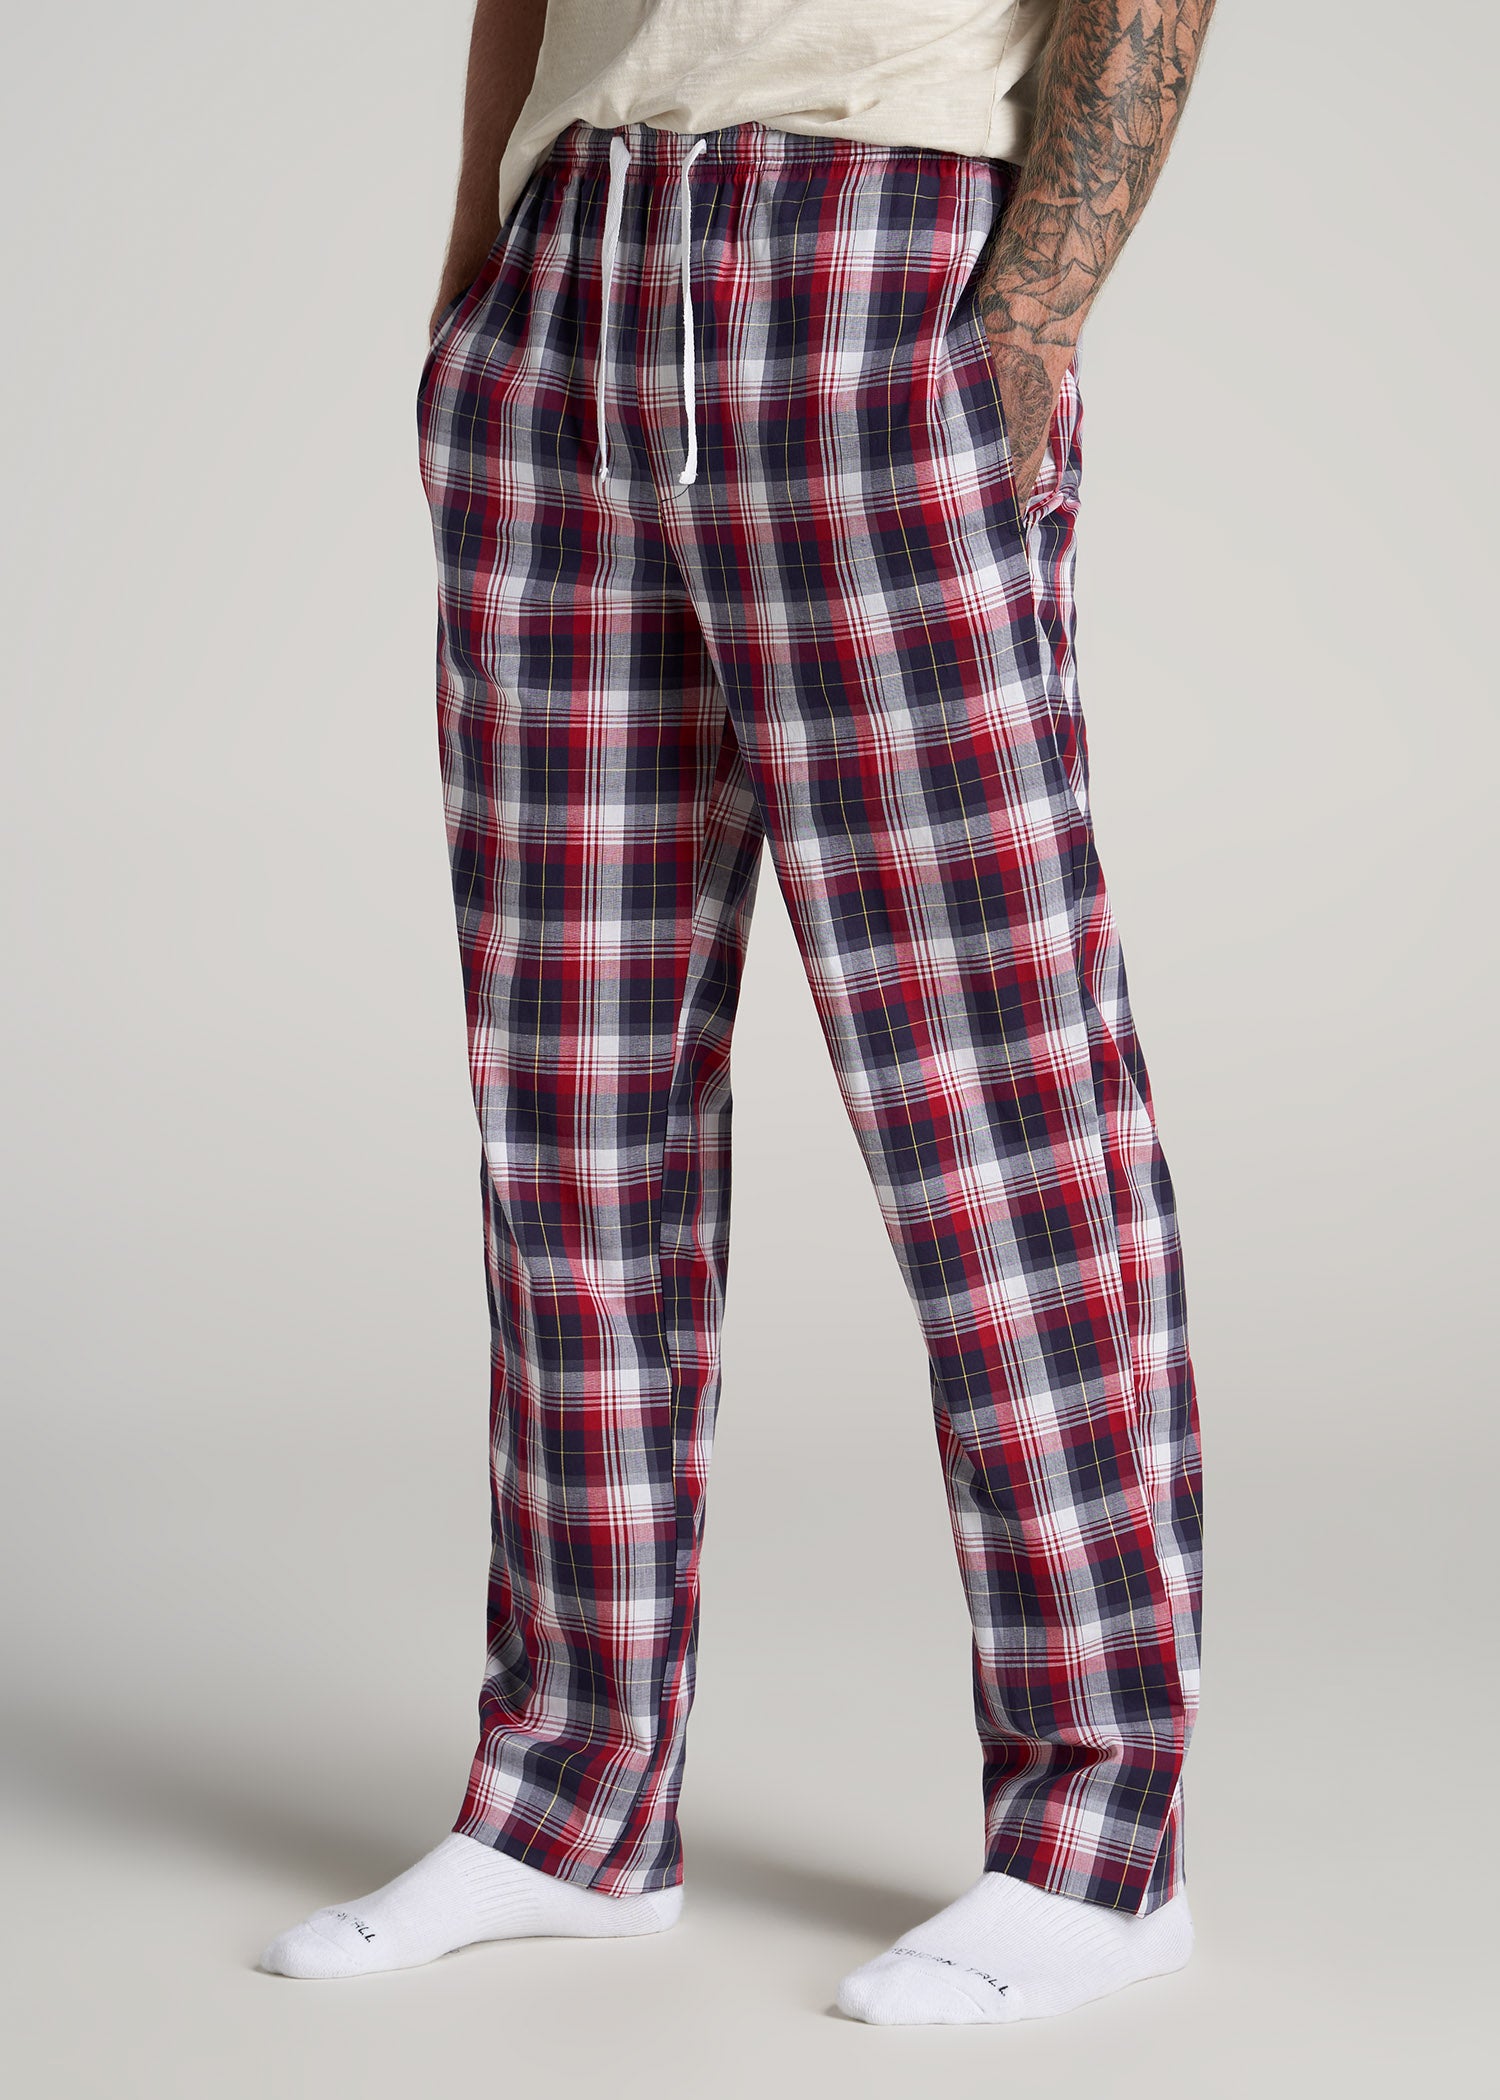 Men's Holiday Plaid Matching Family Pajama Pants XXL- White/Red/Green  Wondershop | eBay